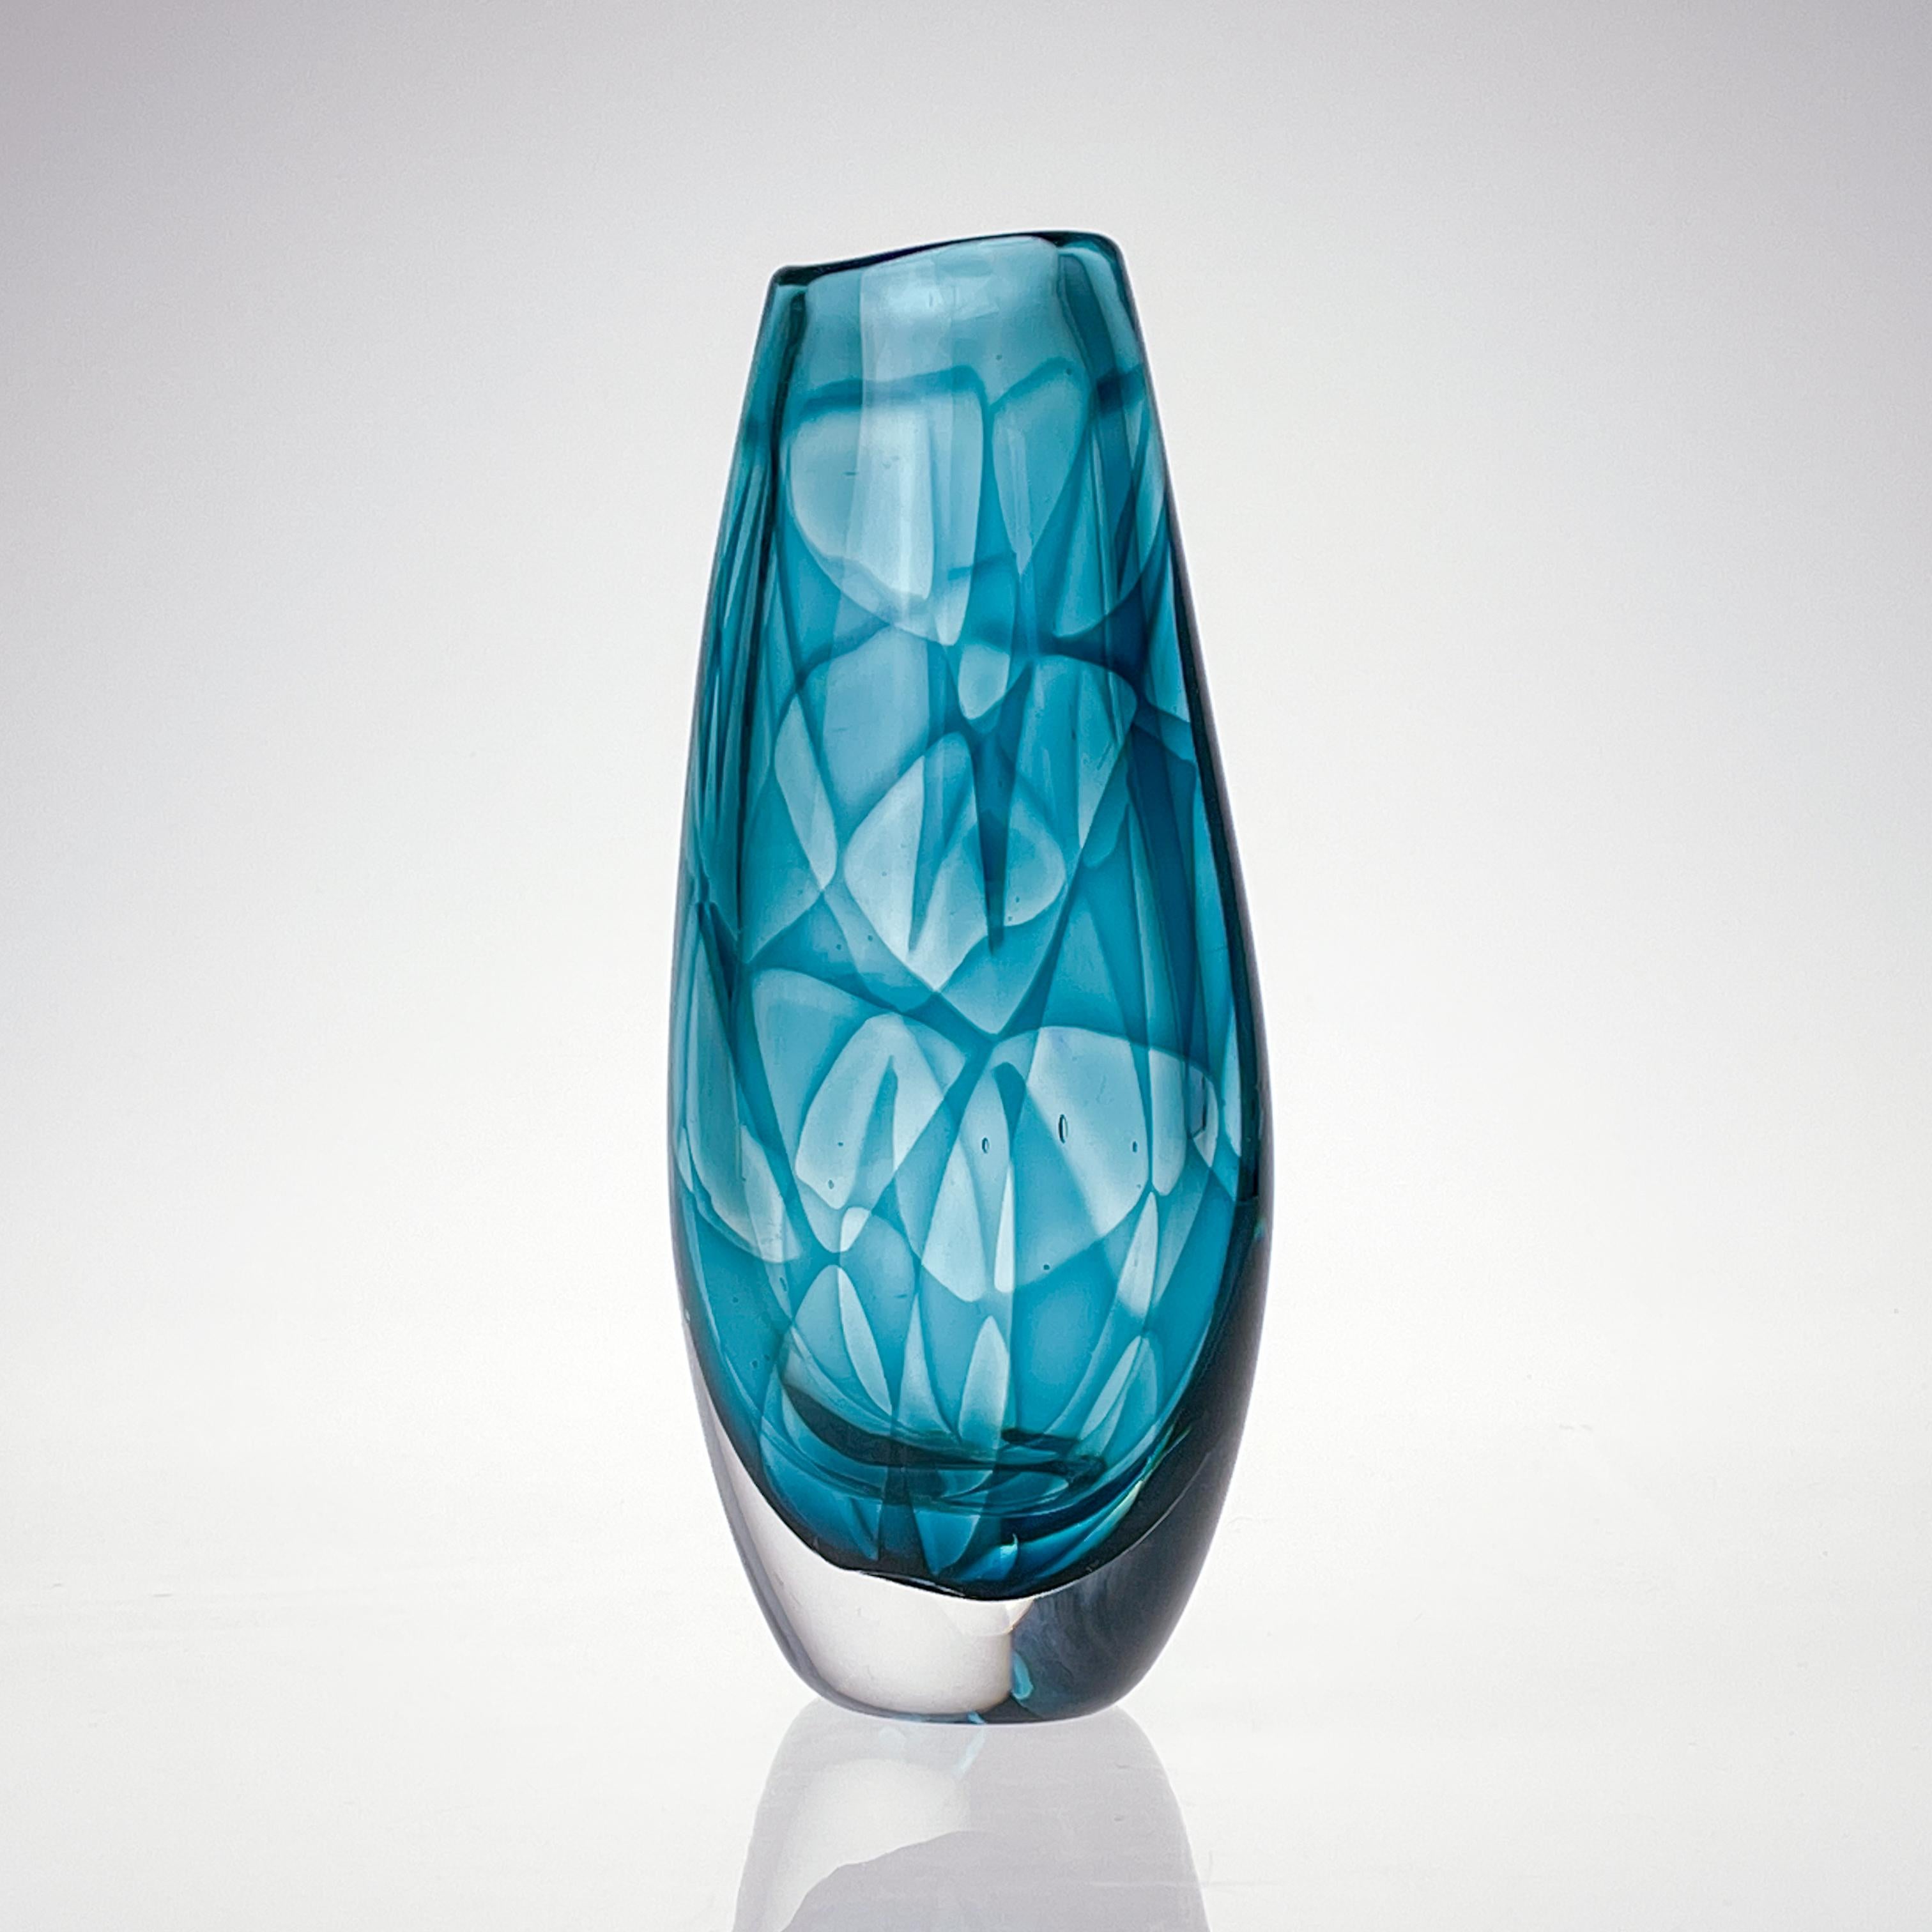 Suédois Vicke Lindstrand vase d'art moderne scandinave en verre couleur turquoise, années 1960 en vente